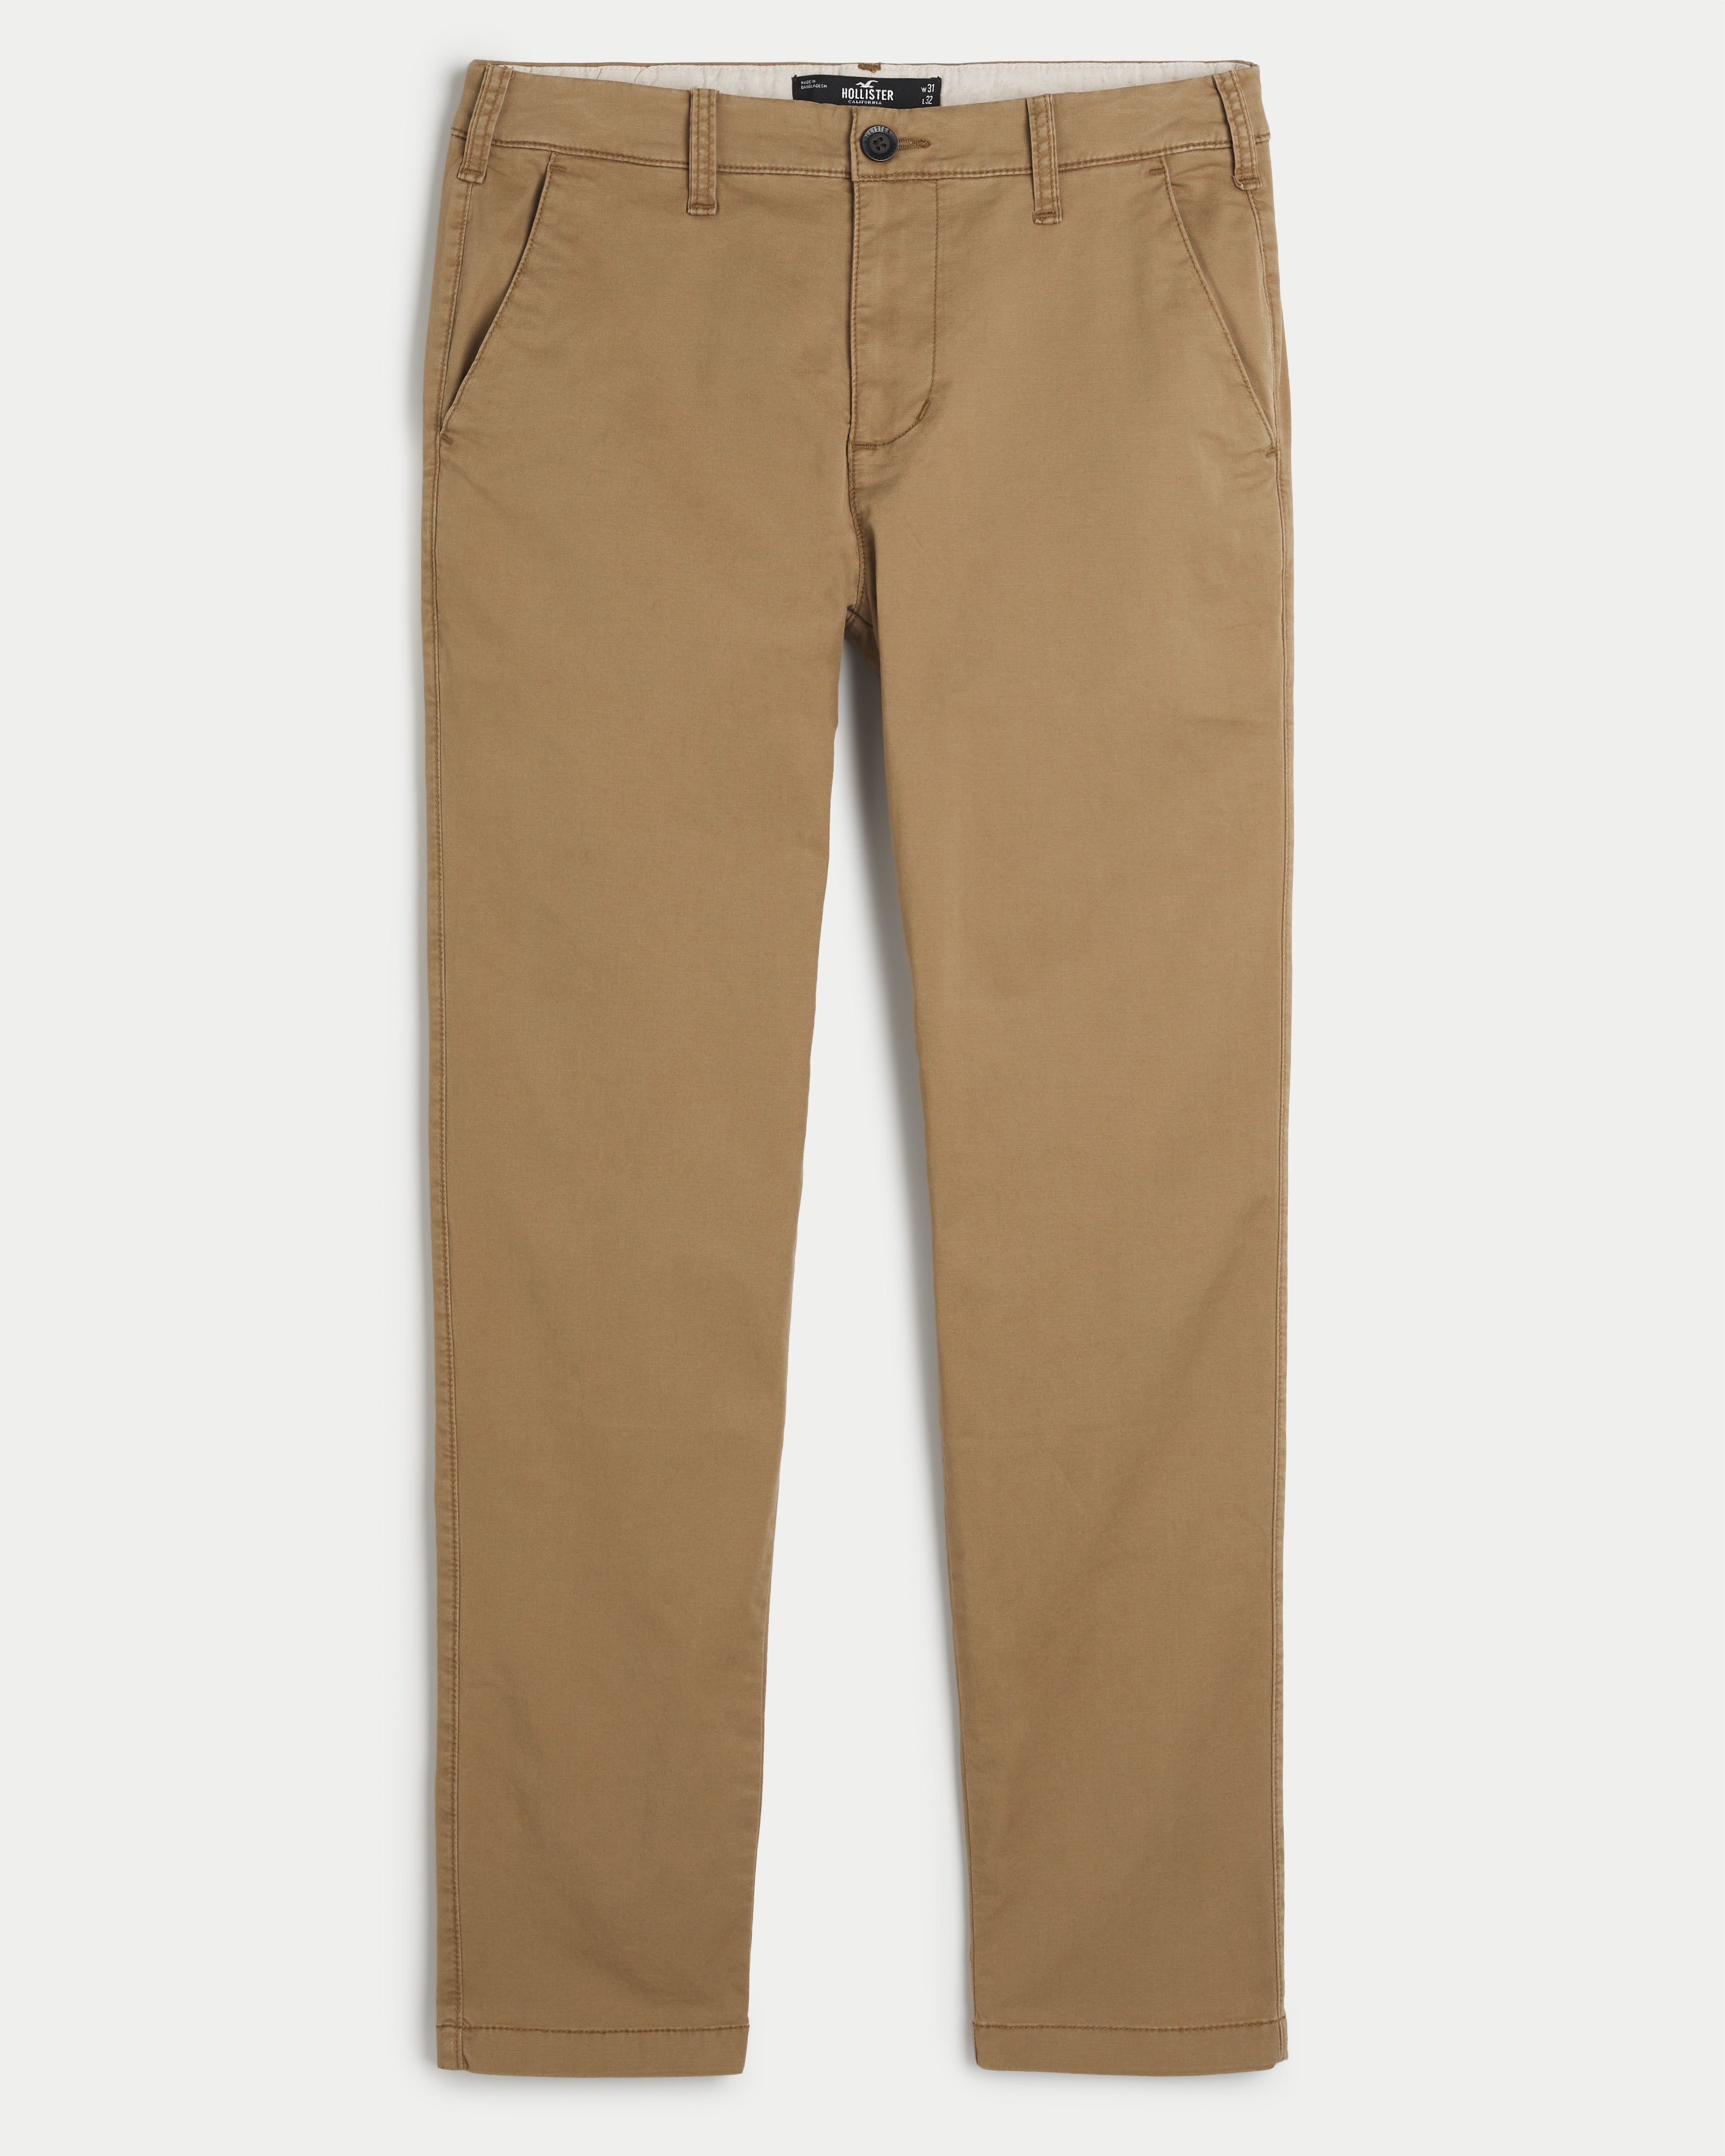 hollister pants for guys